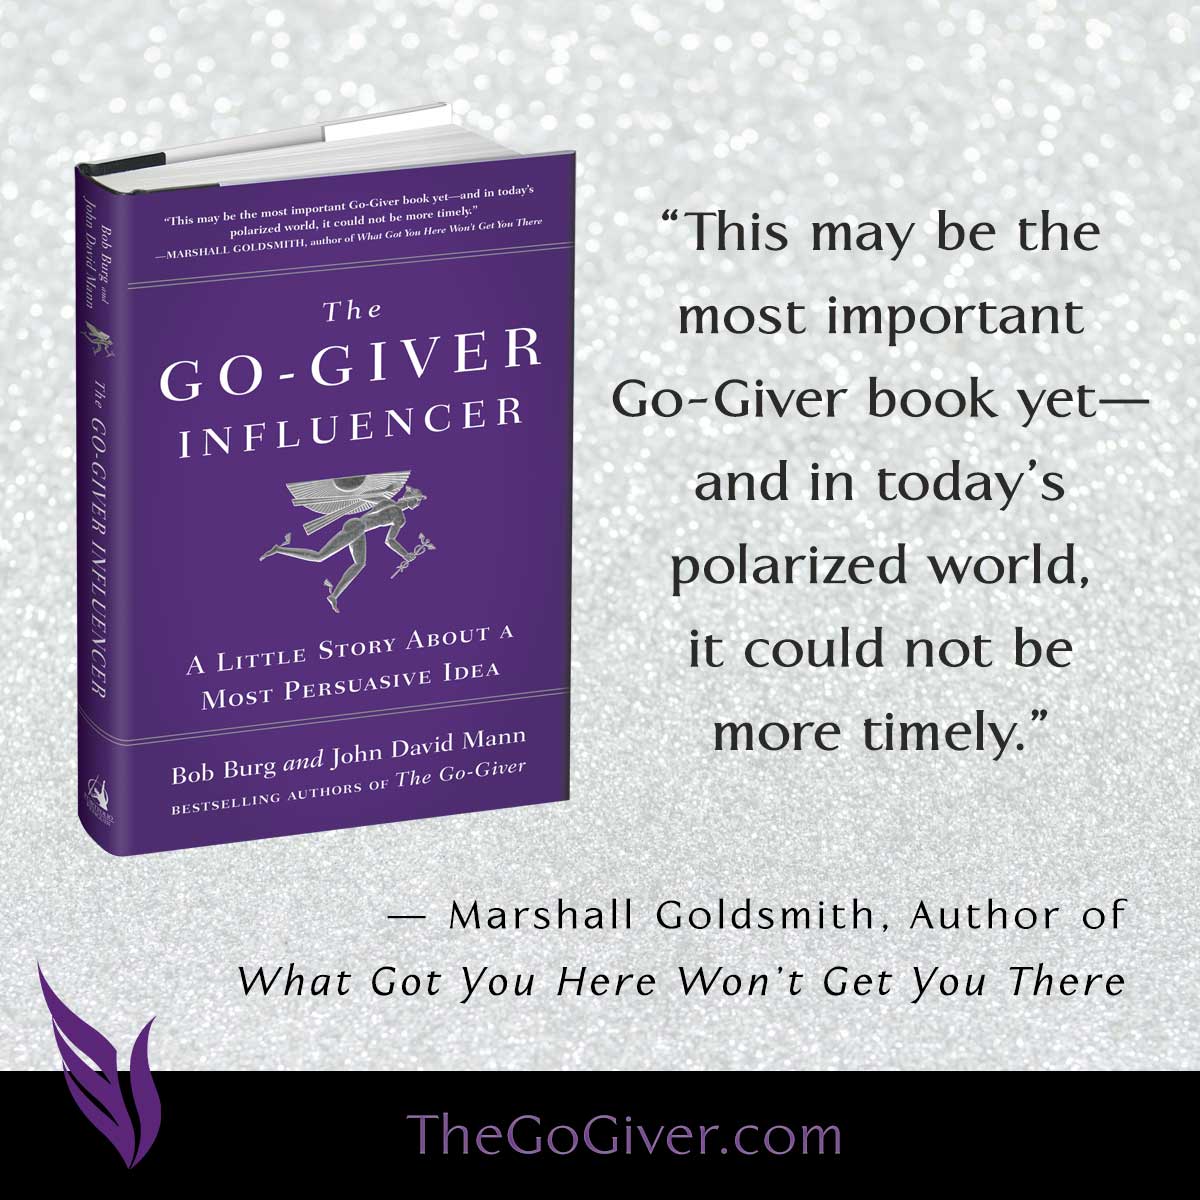 The Go-Giver Influencer by Bob Burg and John David Mann